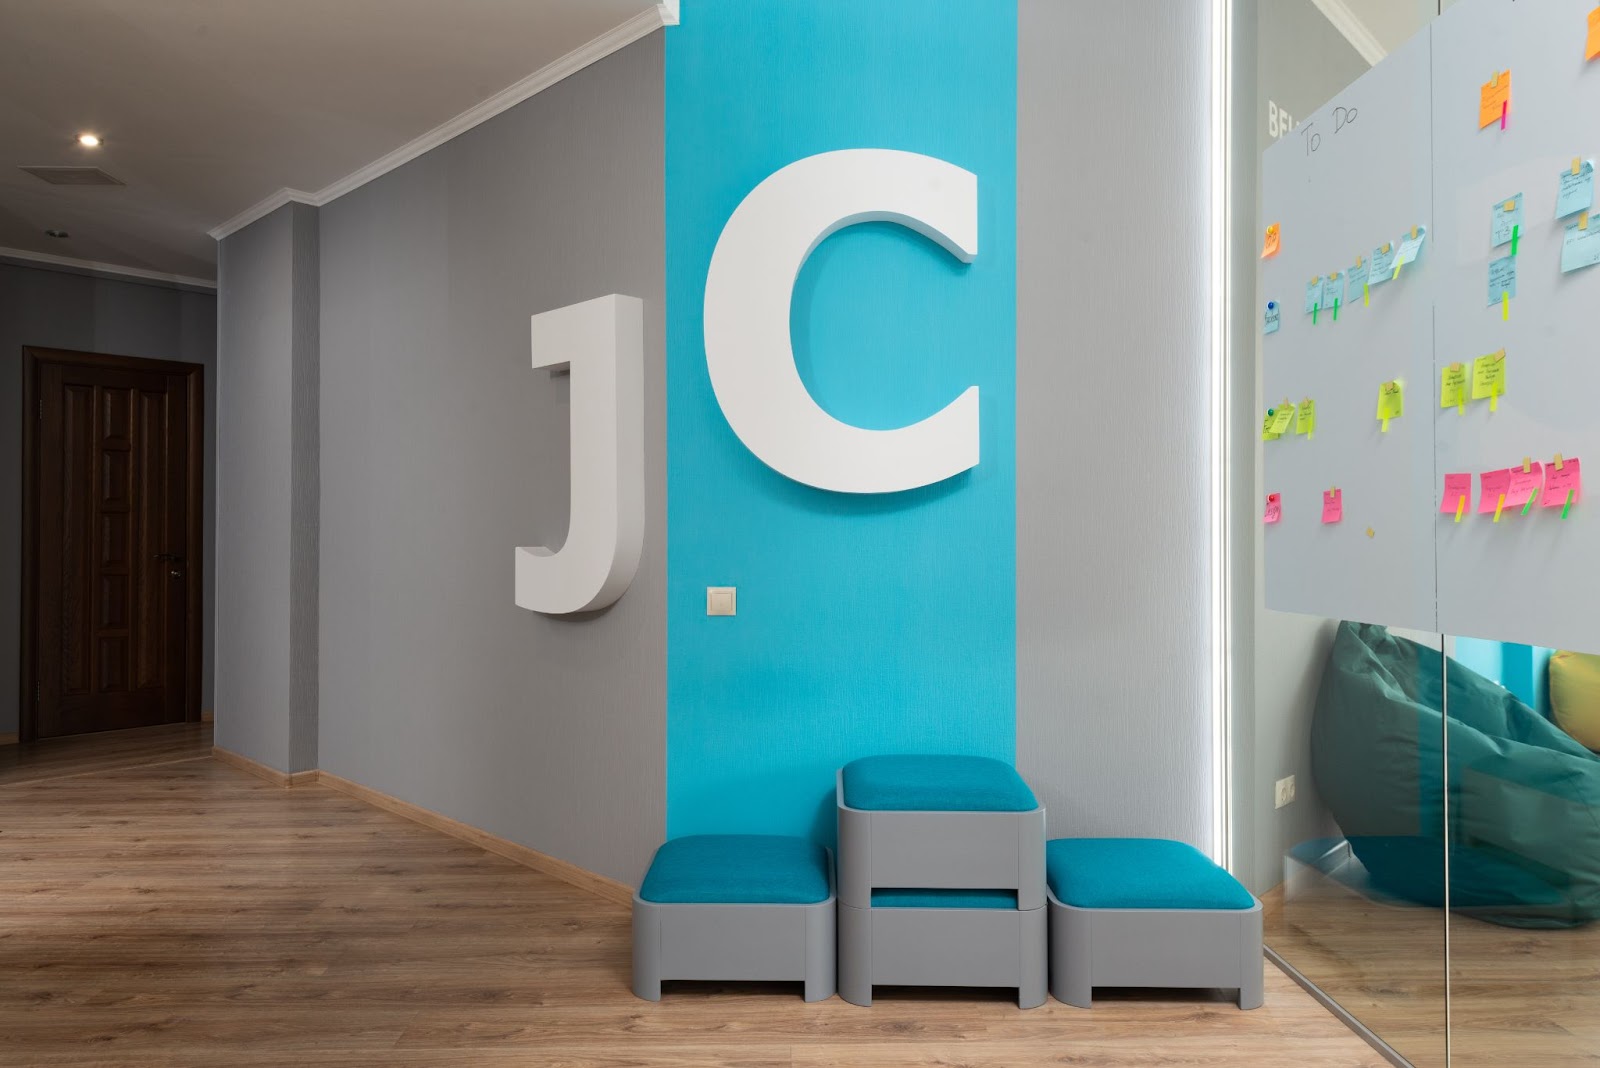 JC office design